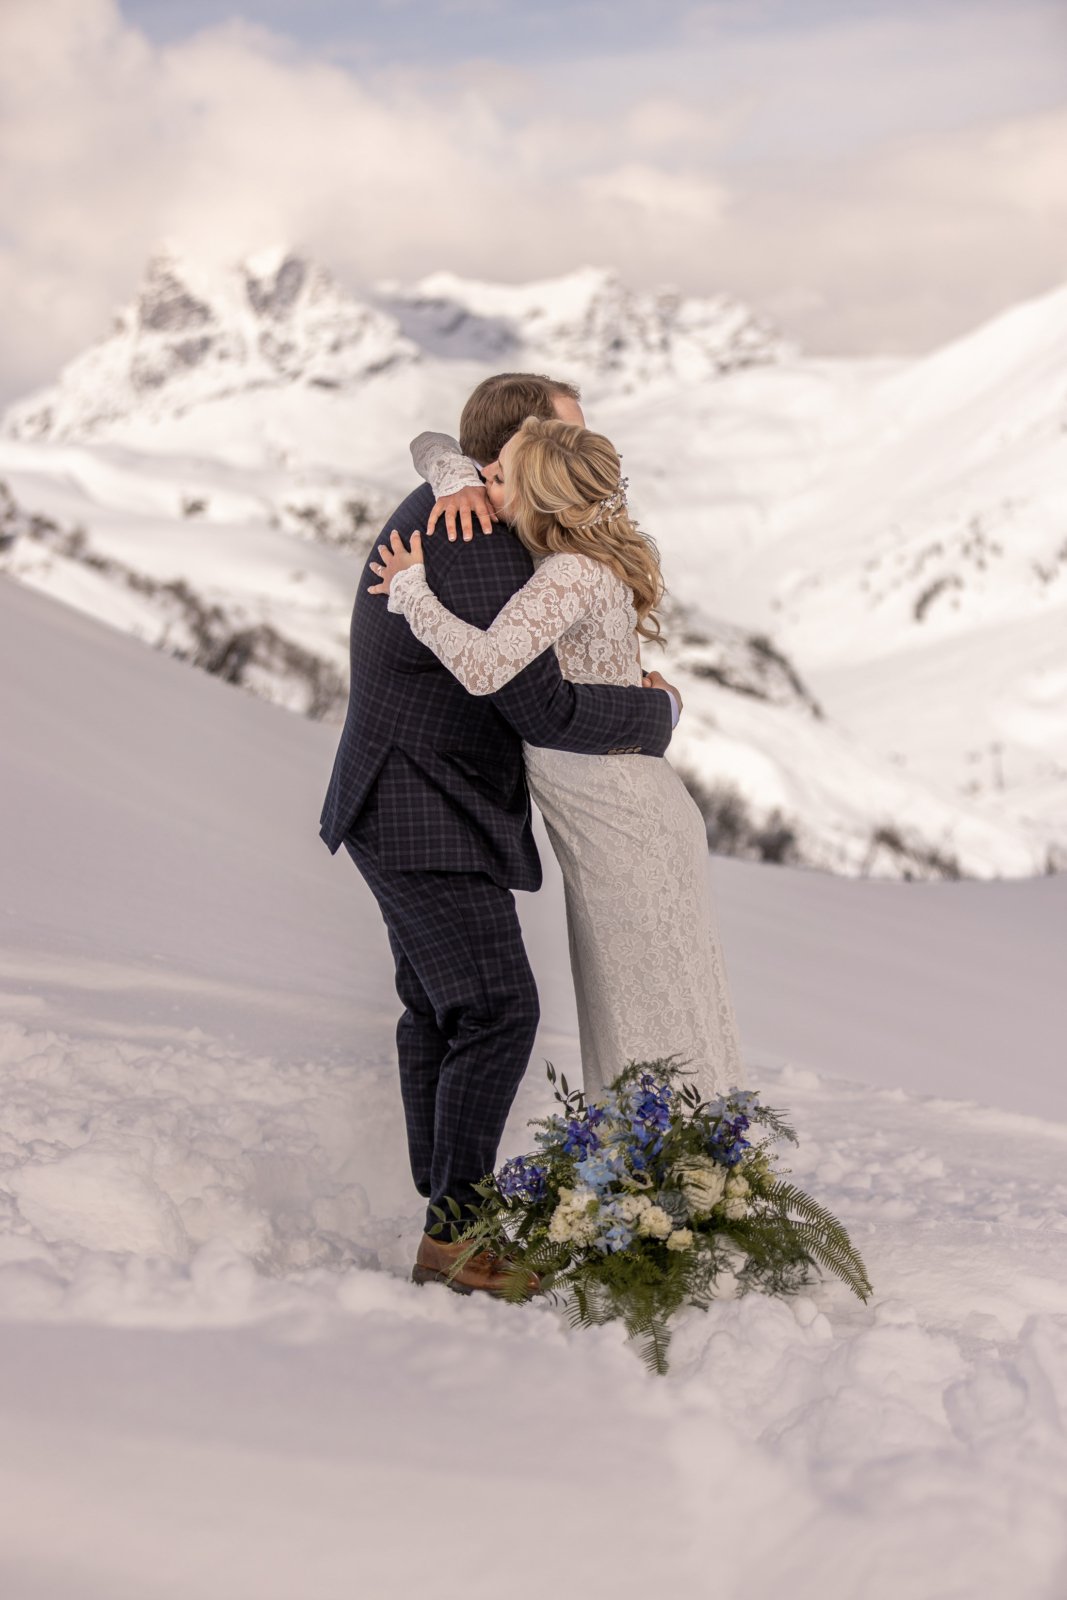 emotional winter elopement in Austria